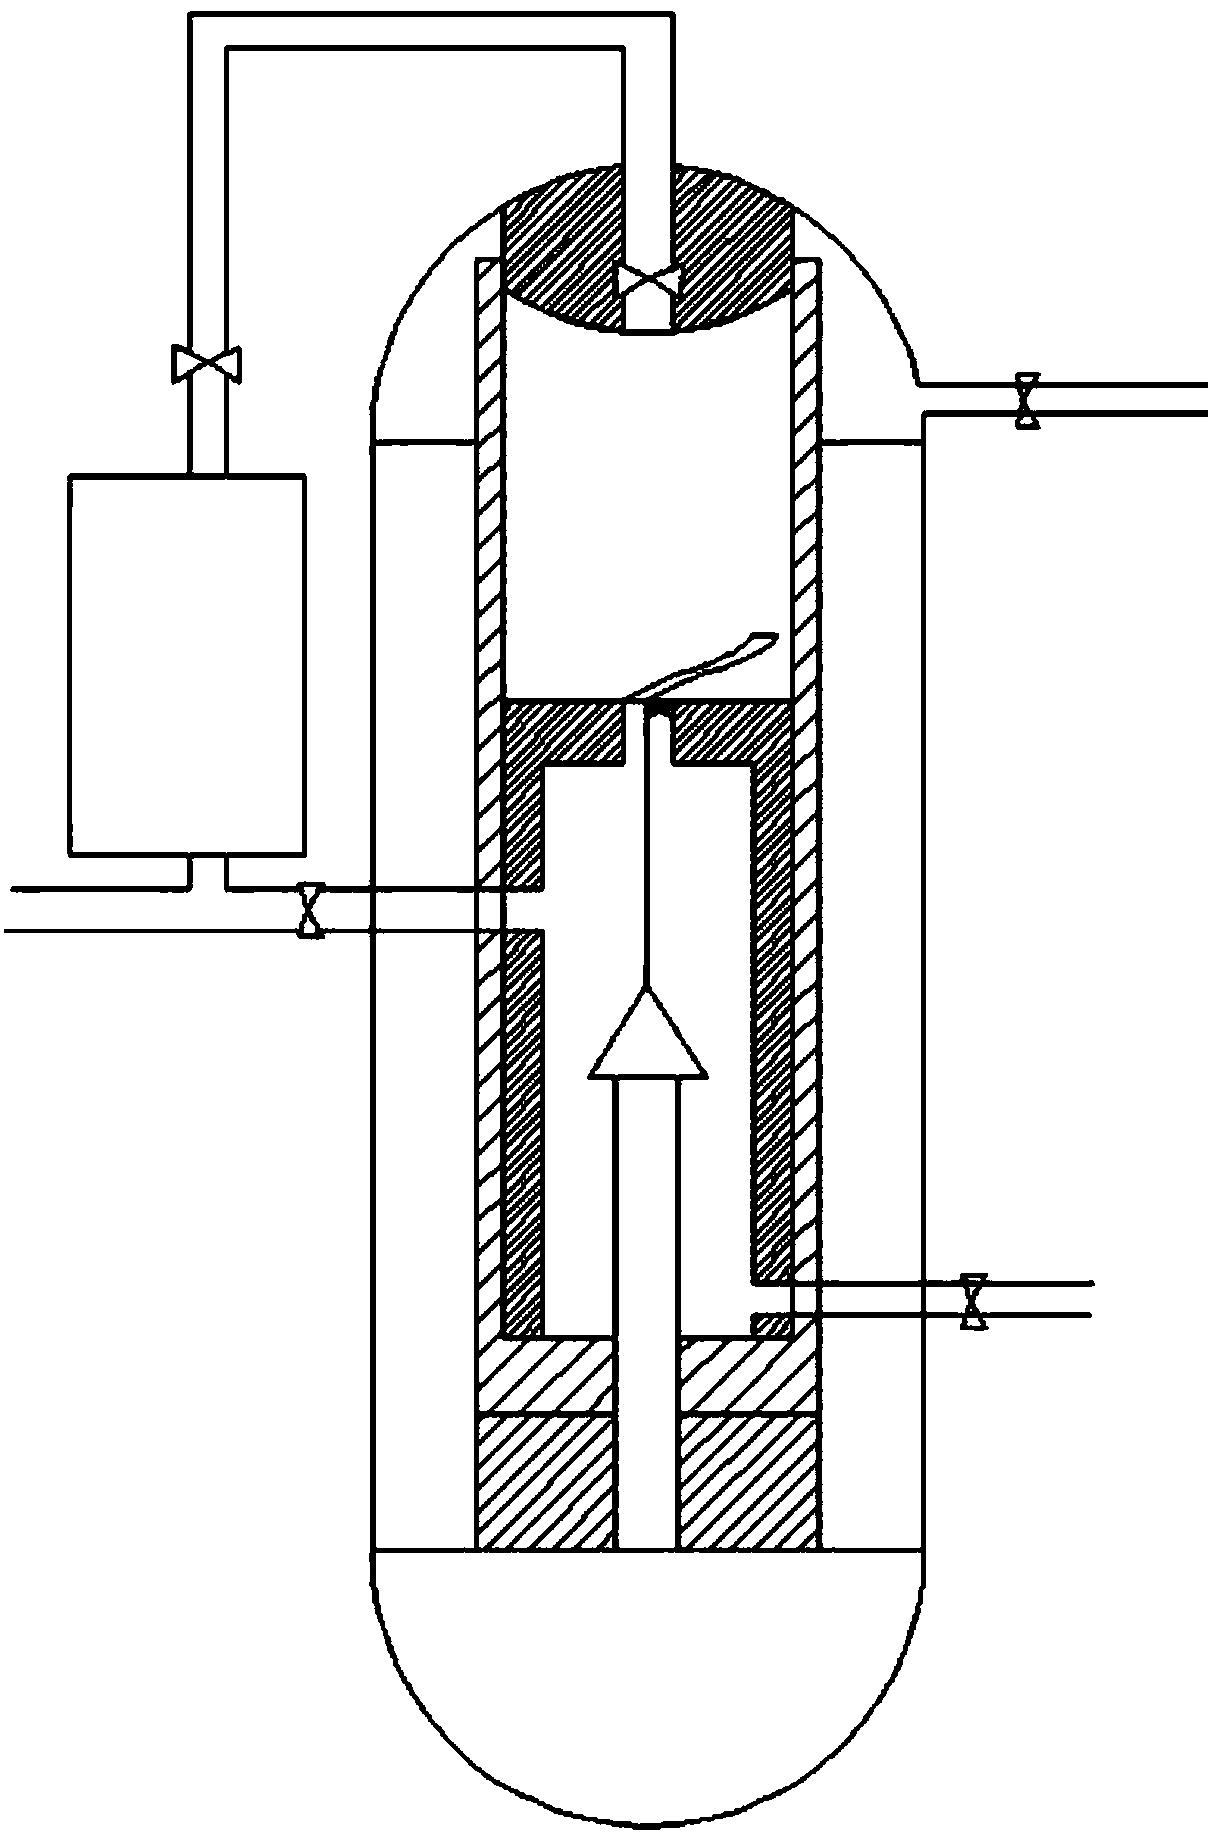 Control method of reformed alkali production reactor